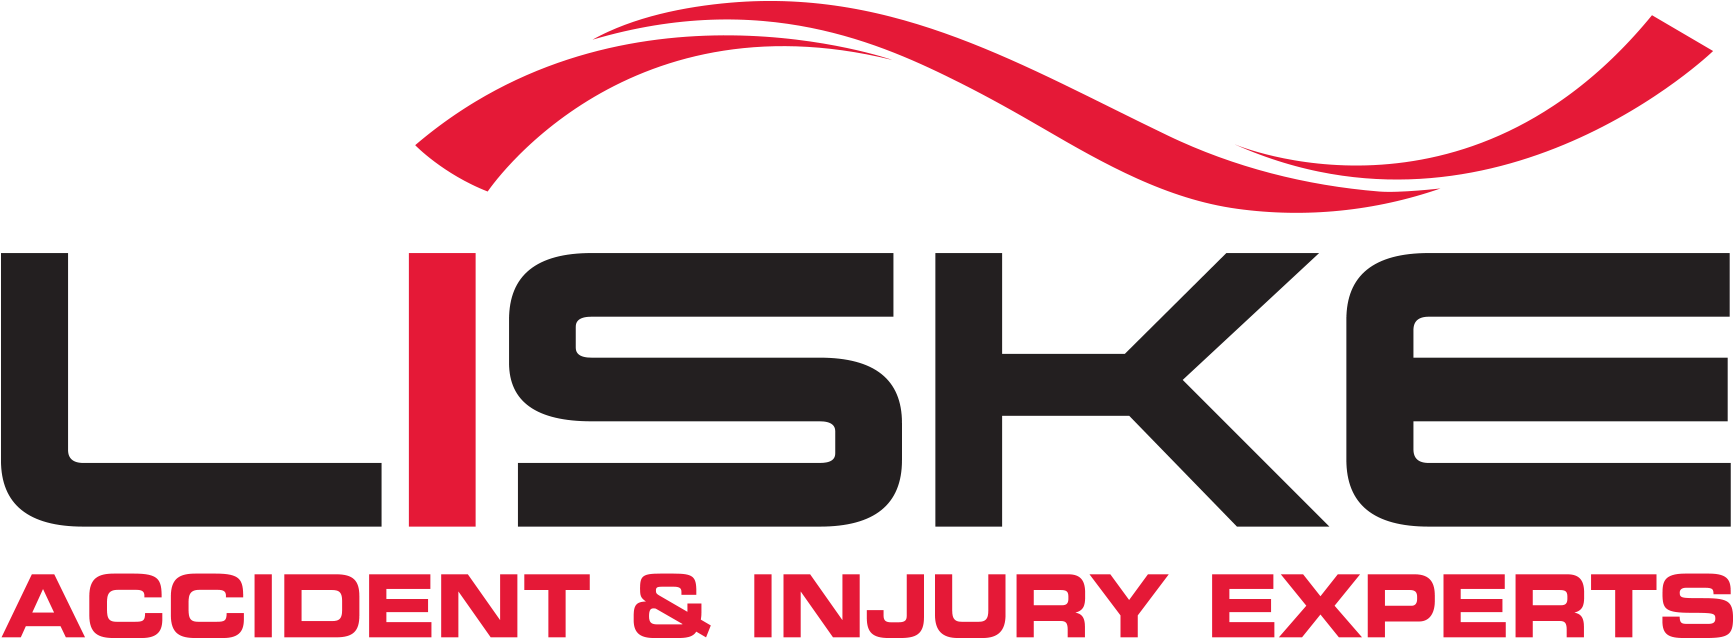 Liske - Liske Accident & Injury Experts (2038x749)